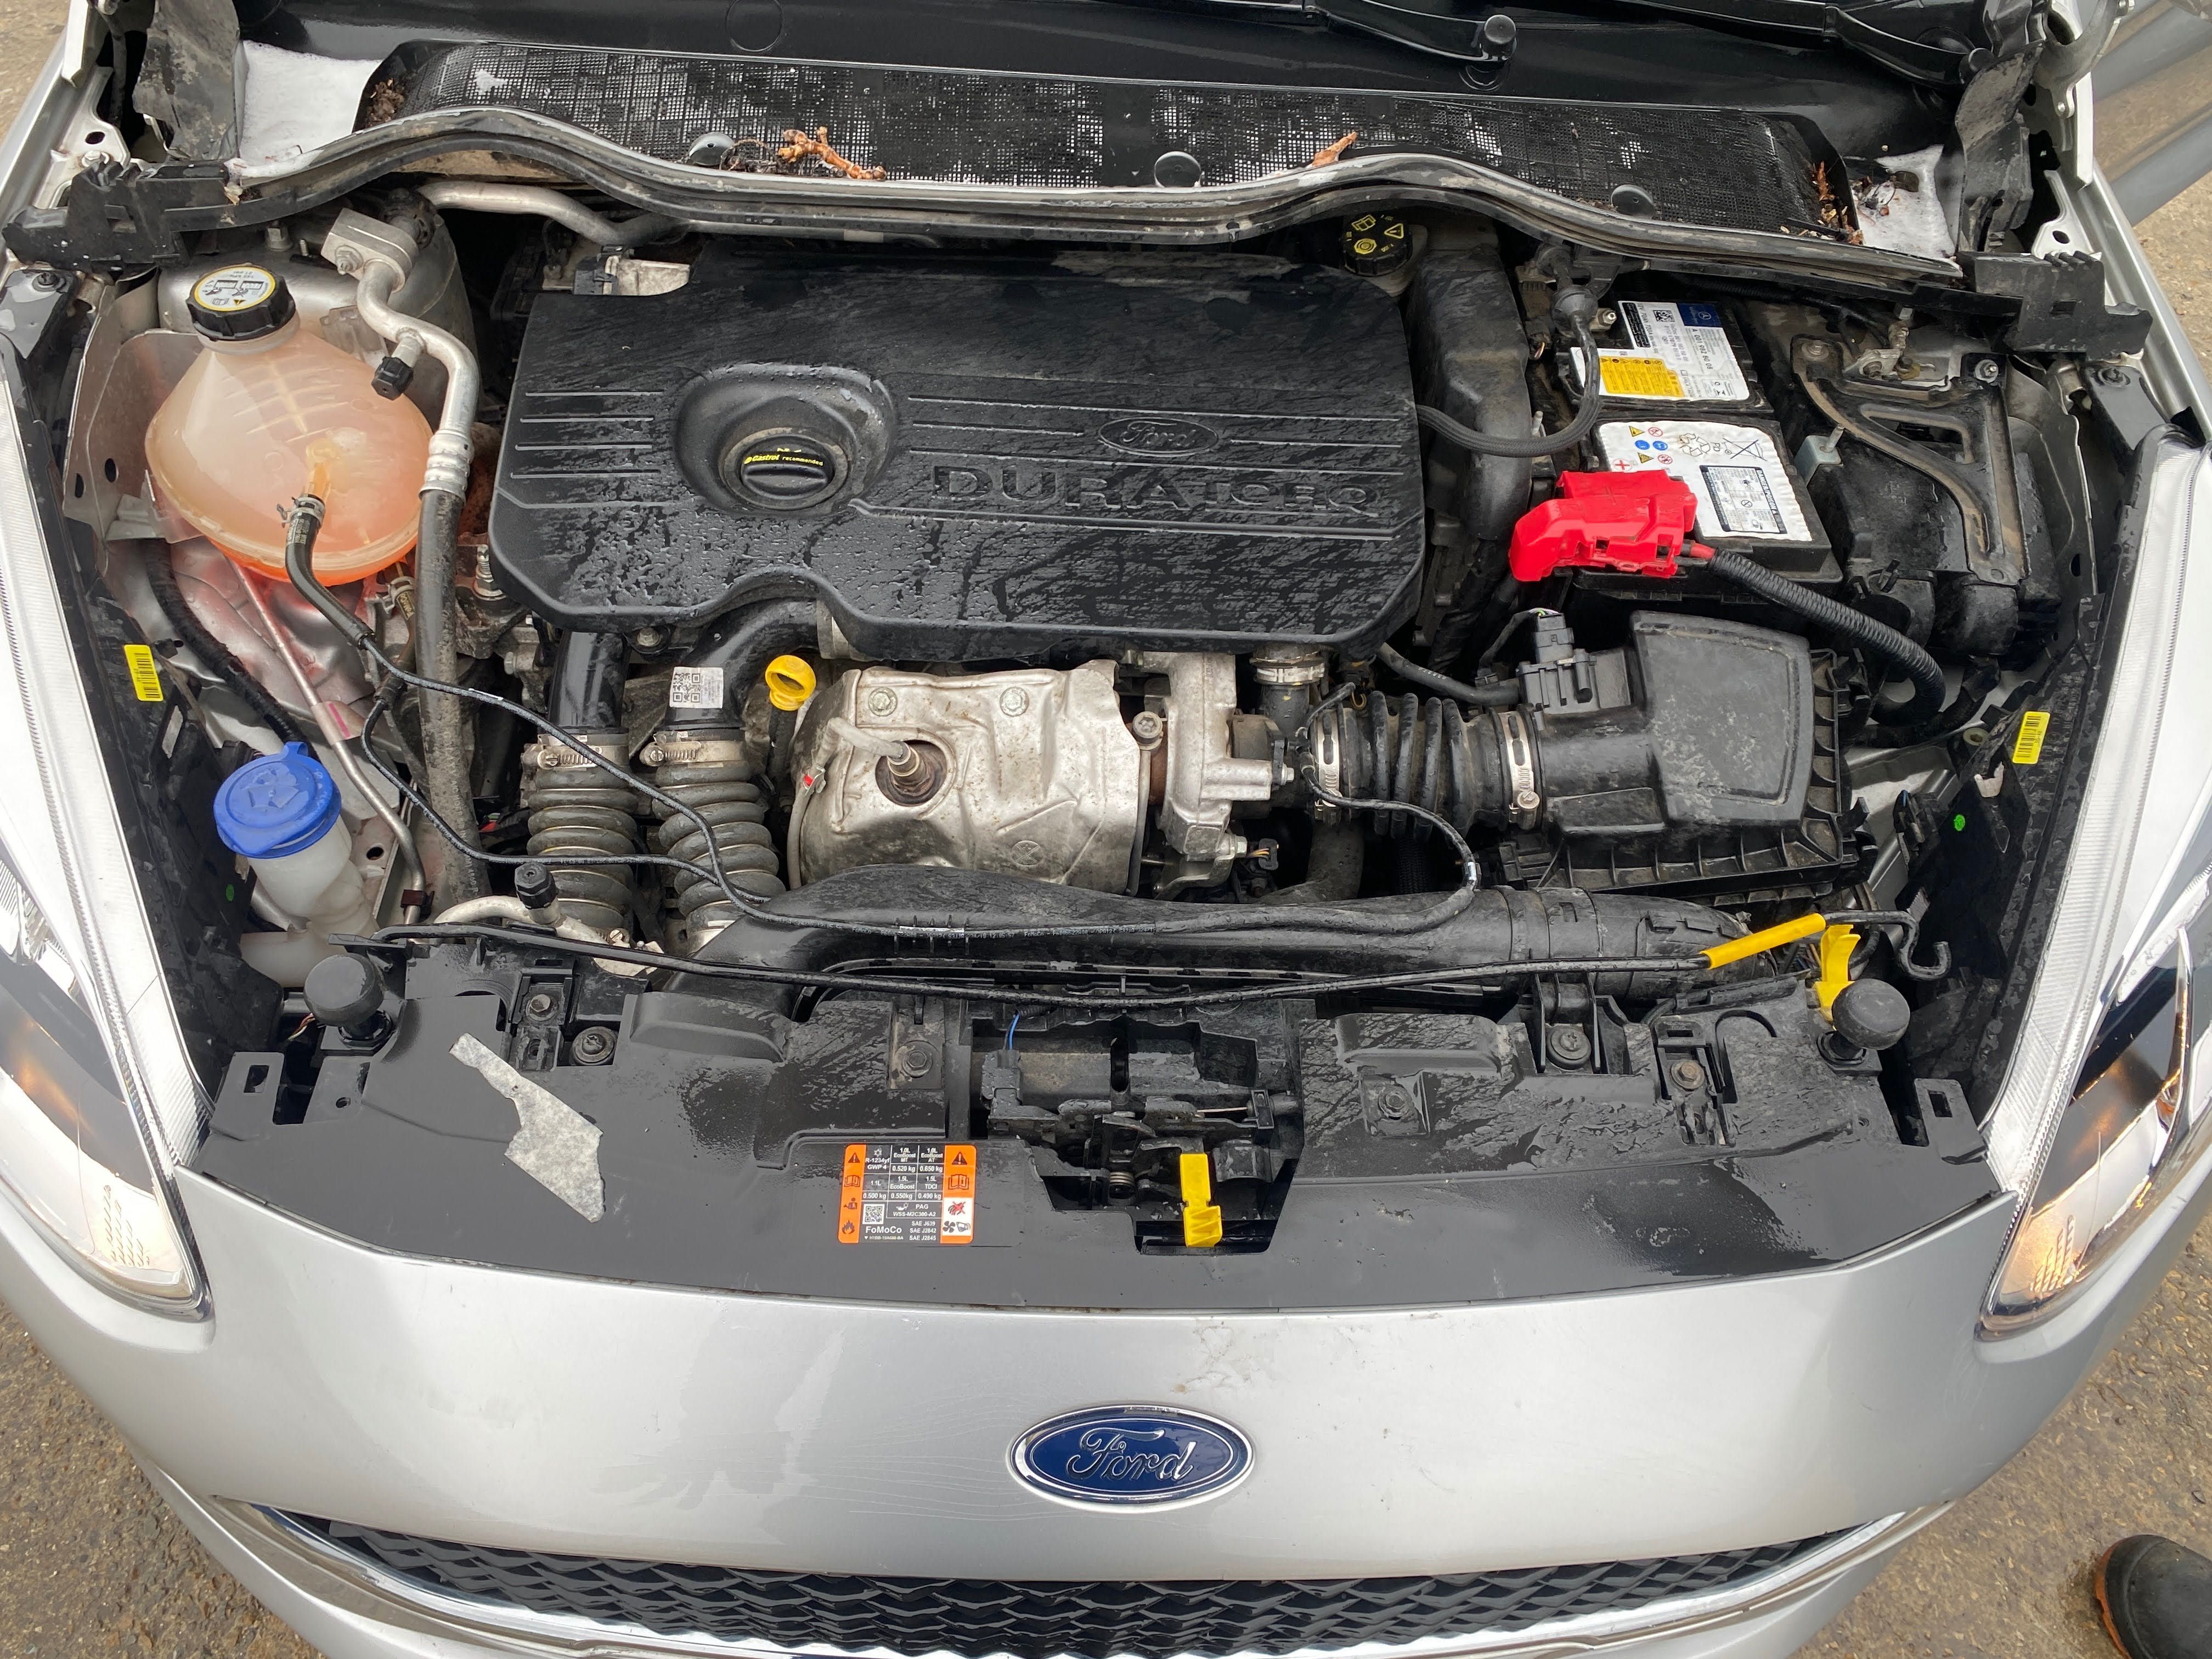 Ford Fiesta 1.5 TDCI, 85 ph., 6 sp., engine XUJN, 99 000 km., 2019